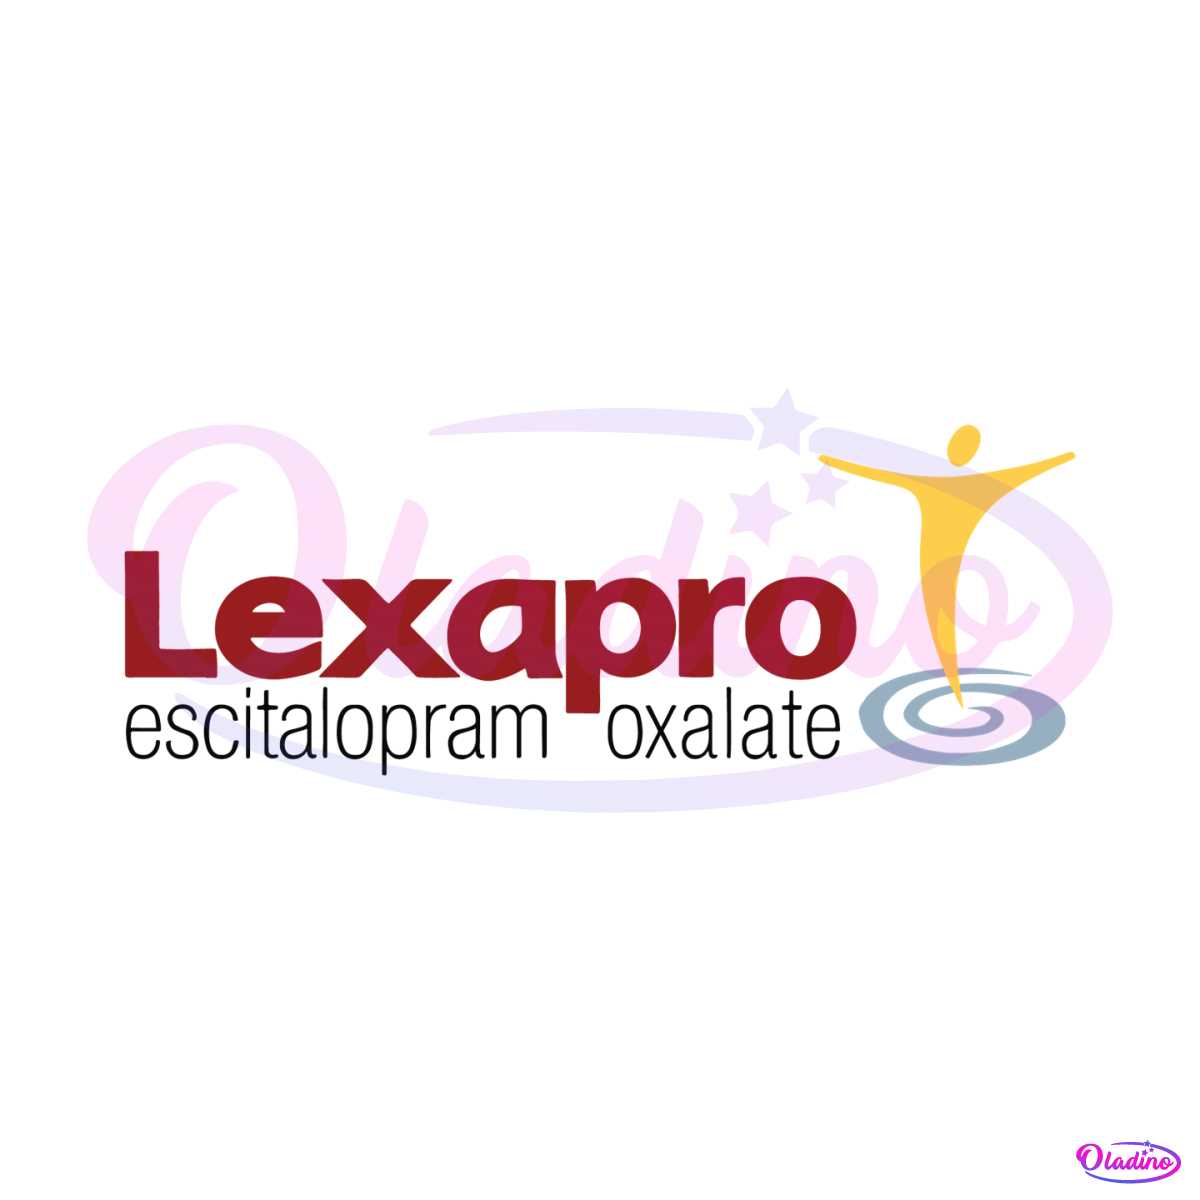 lexapro-escitalopram-oxalate-svg